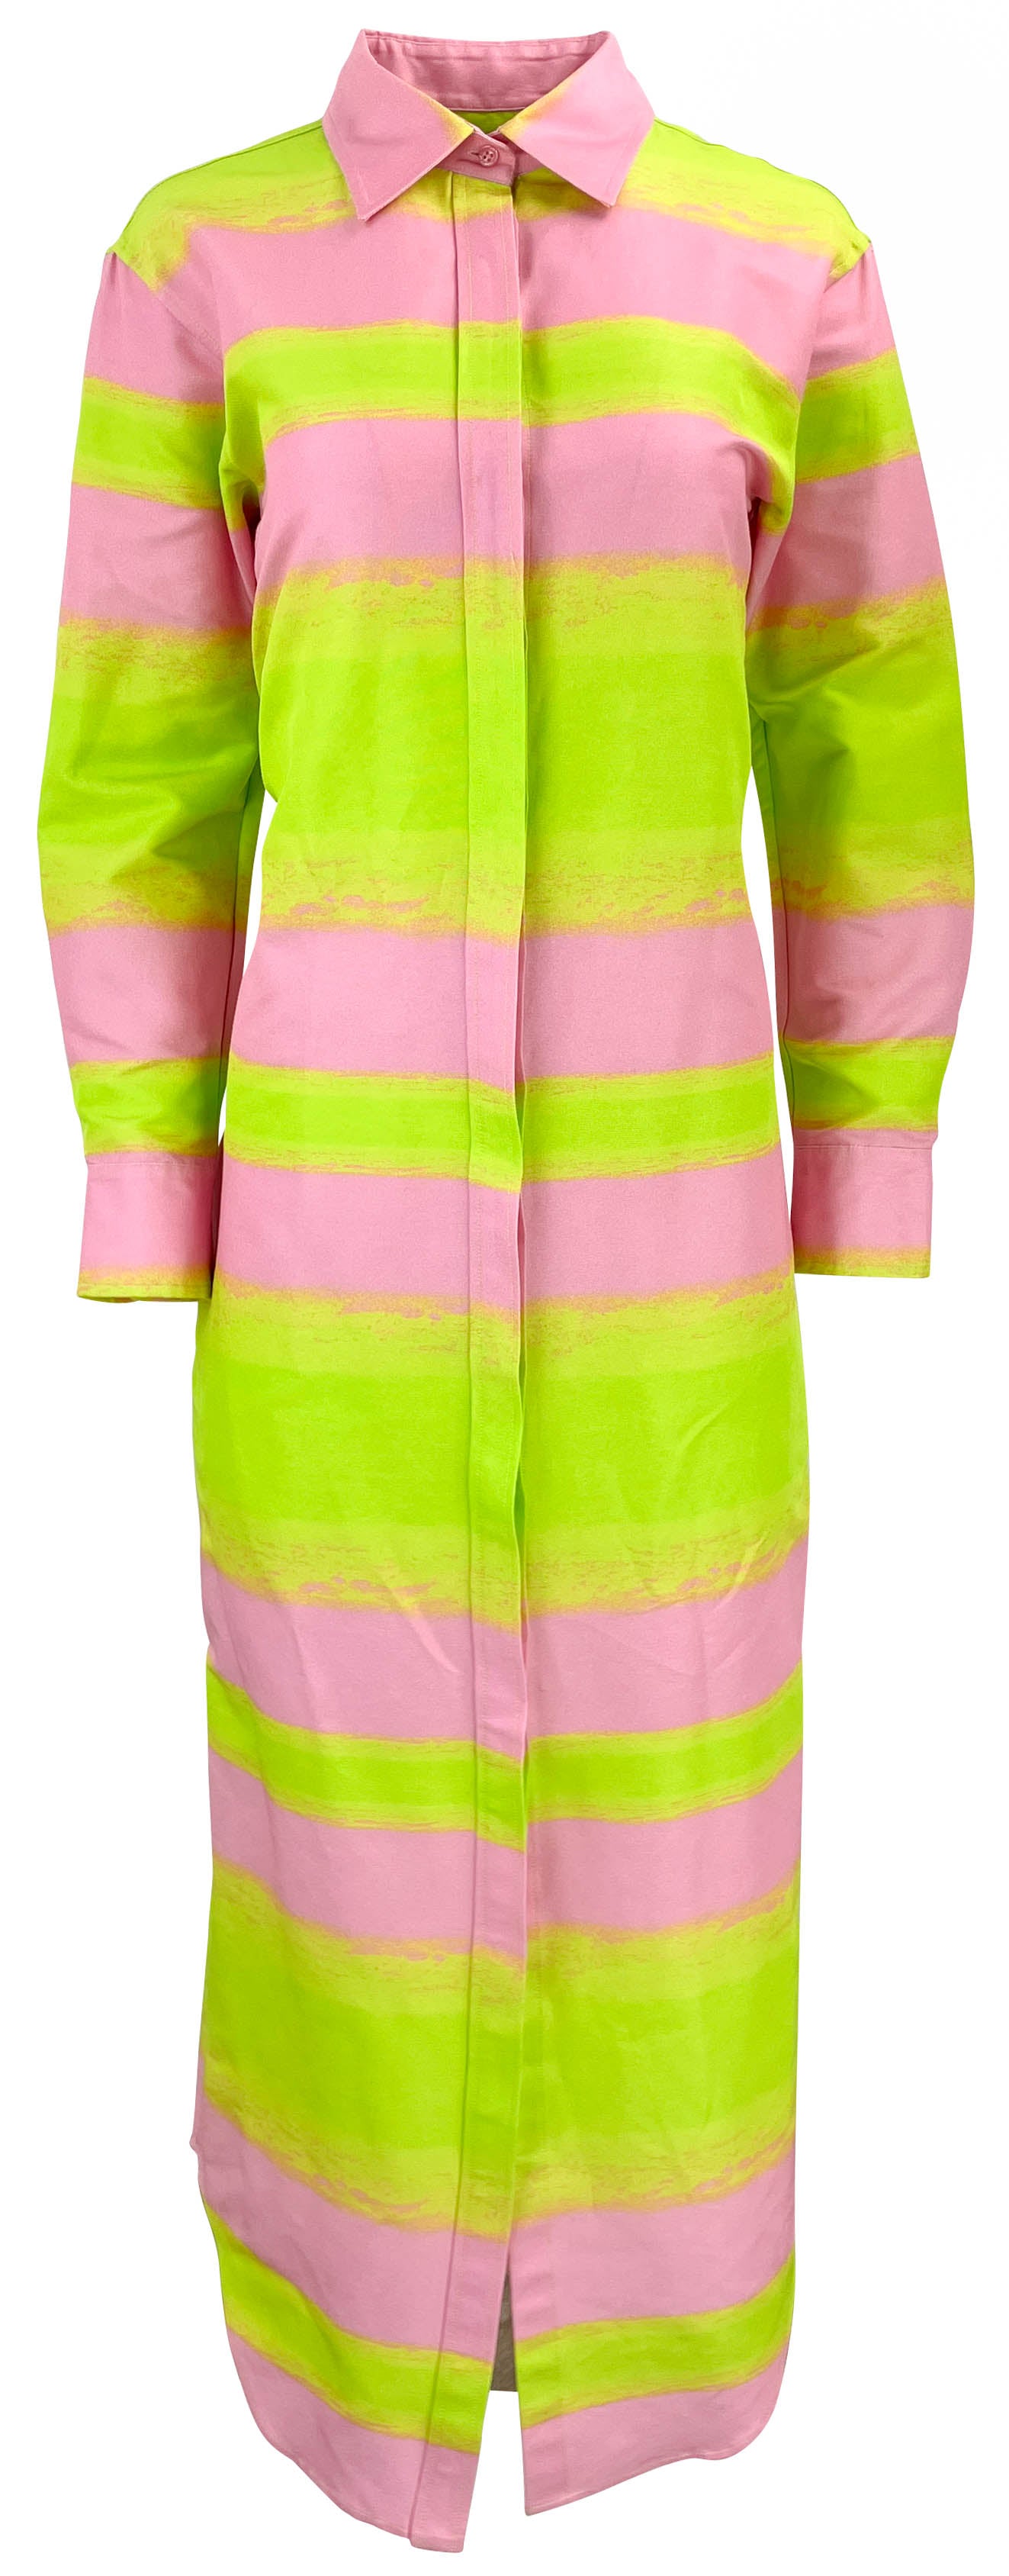 Brandon Maxwell Shirt Dress in Lilac Sachet and Evening Primrose - Discounts on Brandon Maxwell at UAL